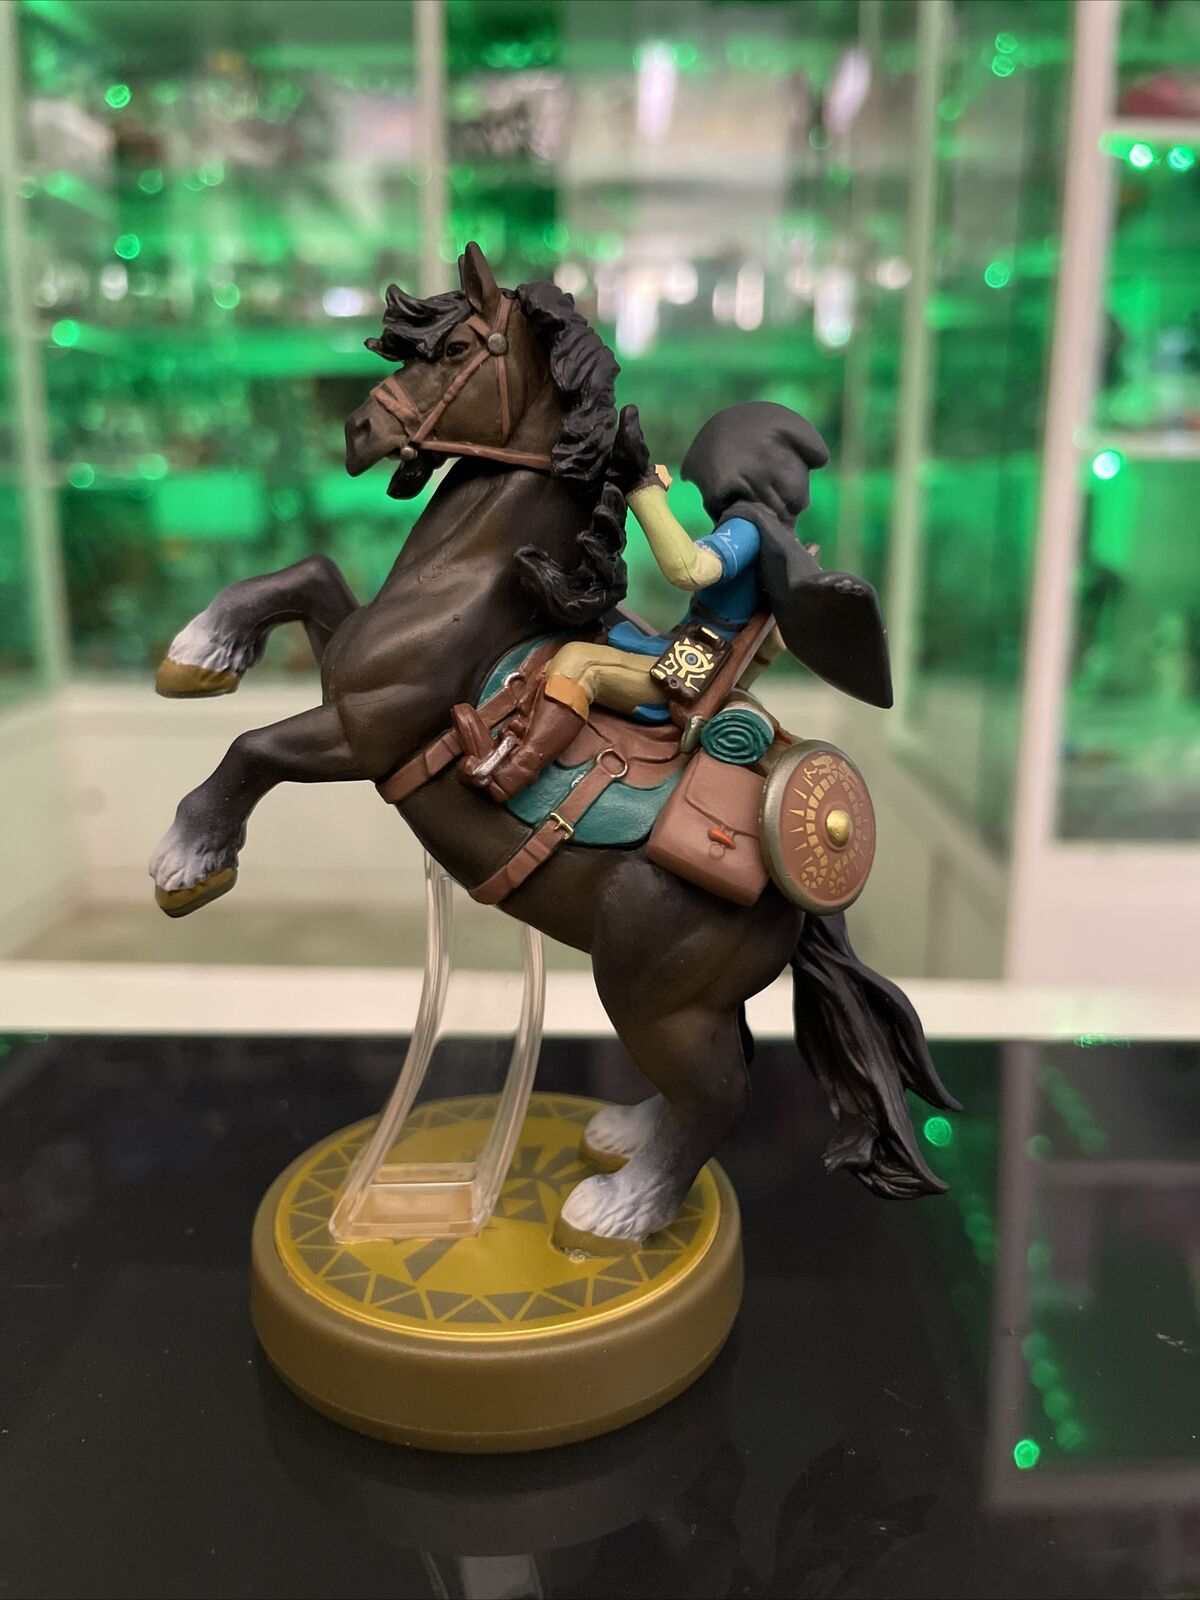 NINTENDO-Amiibo-Link-a-Cavallo-Breath-of-the-Wild-Horse-Rider-WIIU-Switch-3DS-144786410806-3